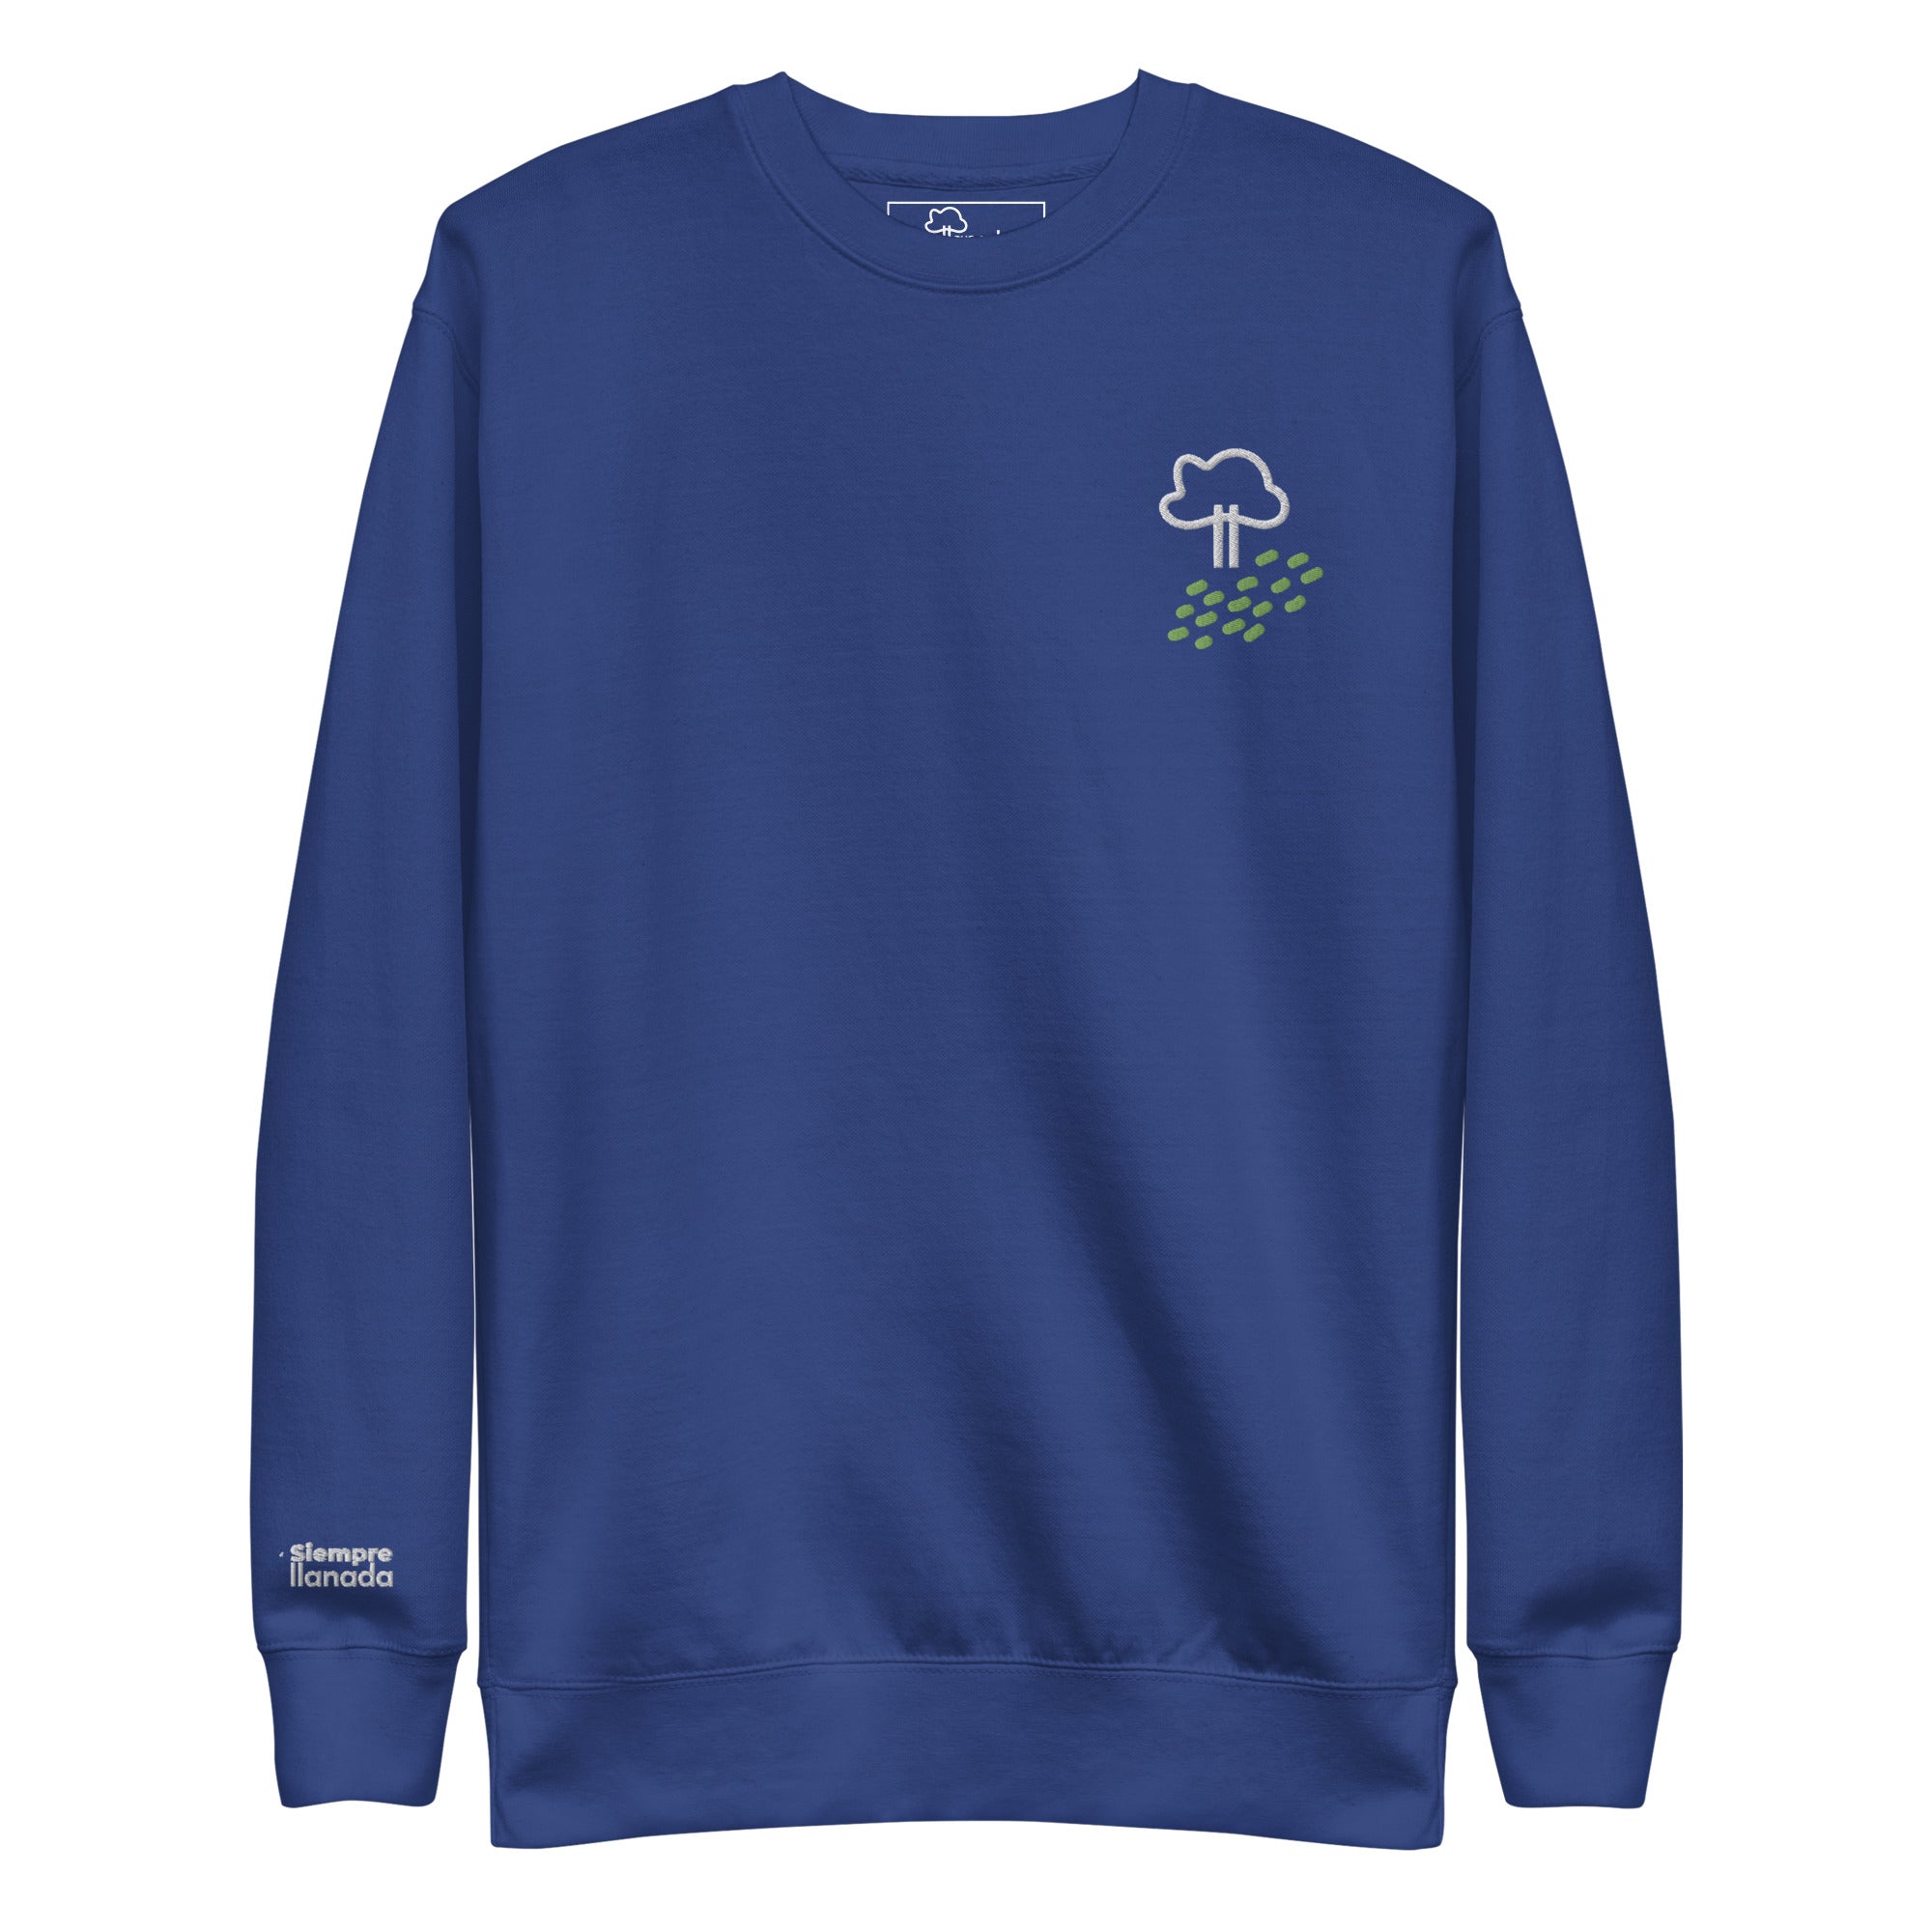 unisex-premium-sweatshirt-team-royal-front-64ca8b69ac0a9.jpg